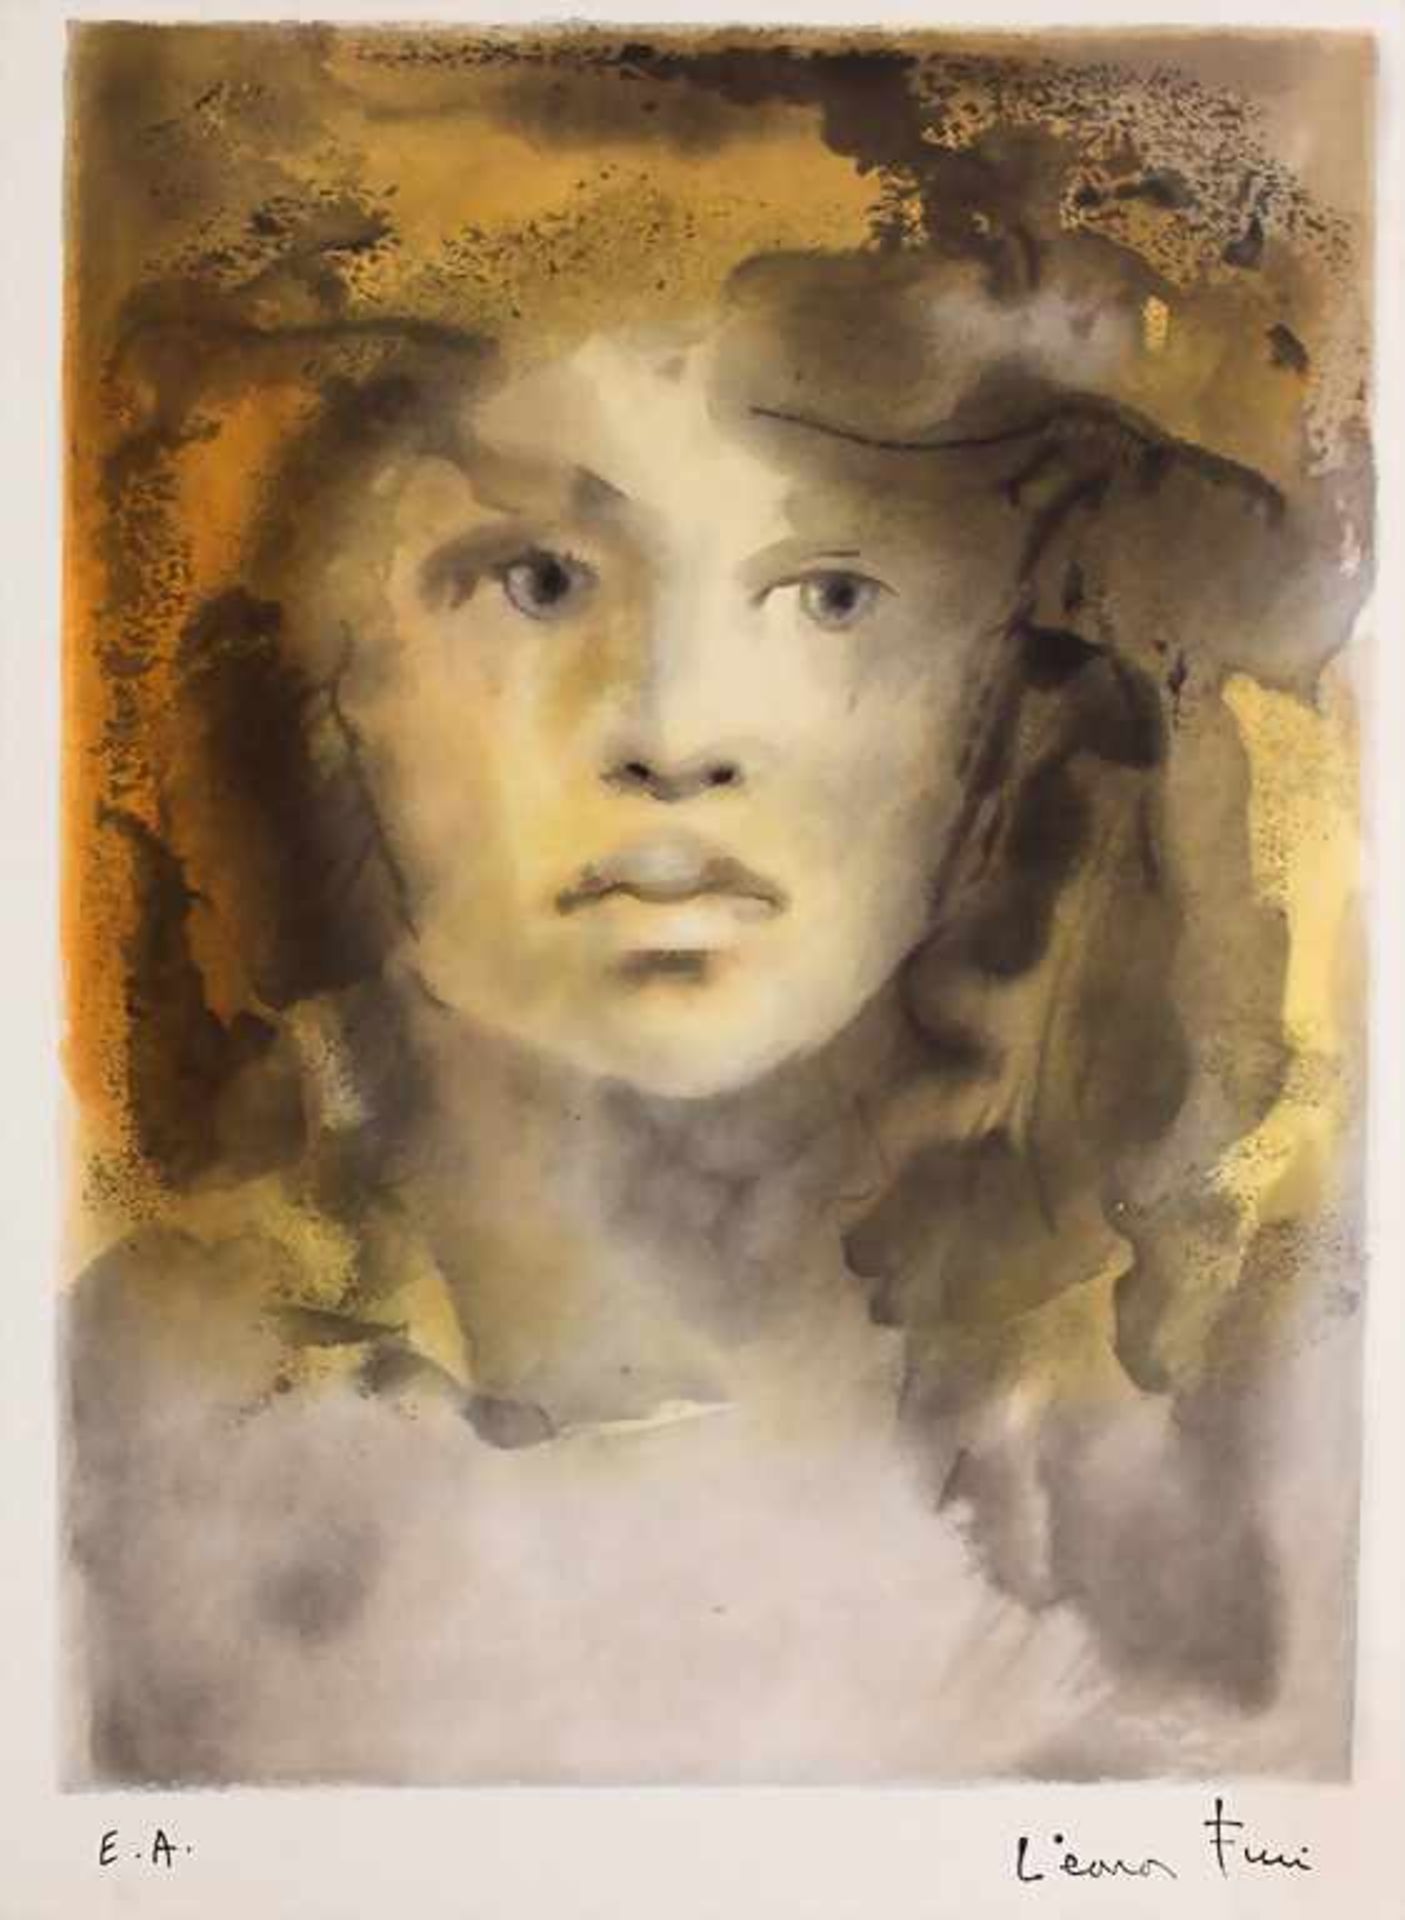 Leonor Fini (1907-1996), 'Porträt einer Frau' / 'A portrait of a woman'Technik: Farblithografie